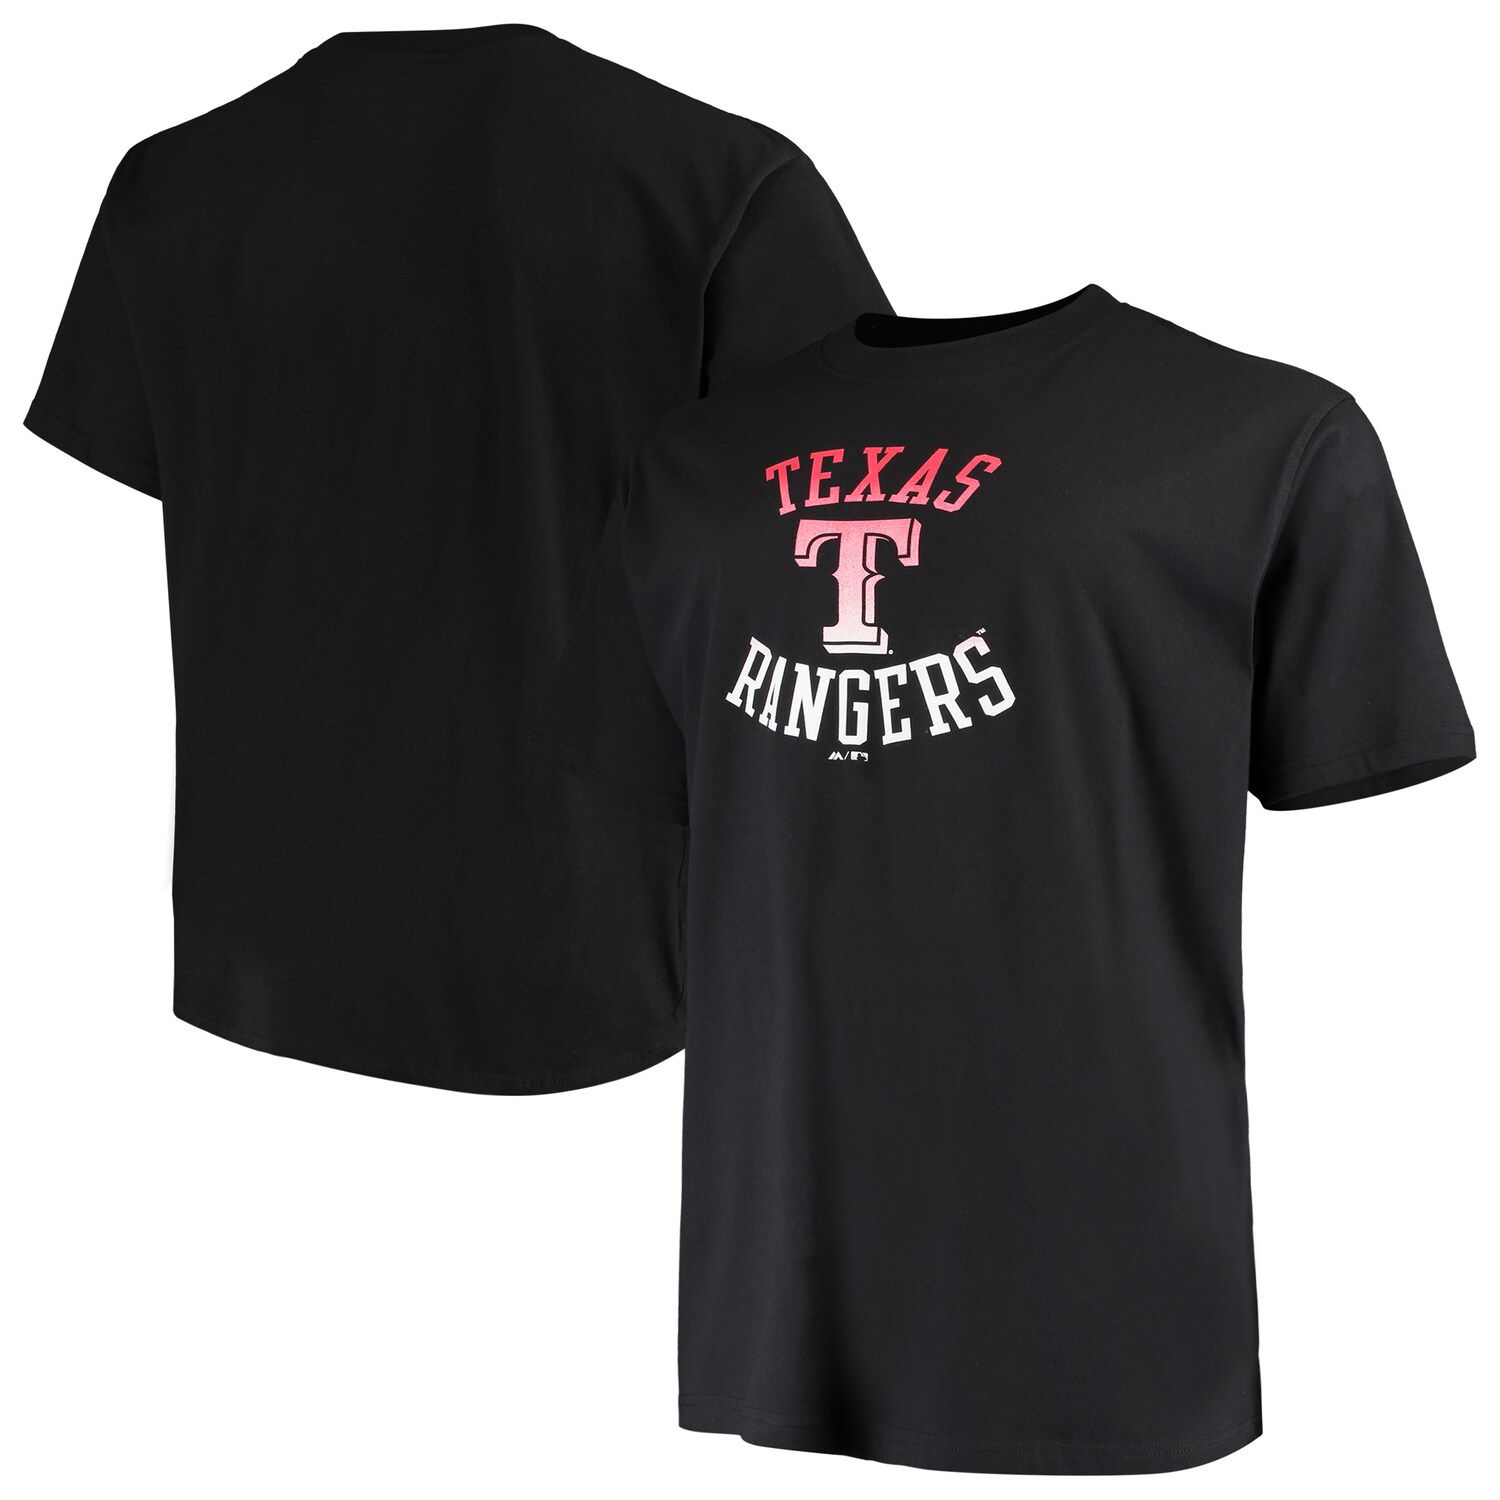 texas rangers big and tall shirts